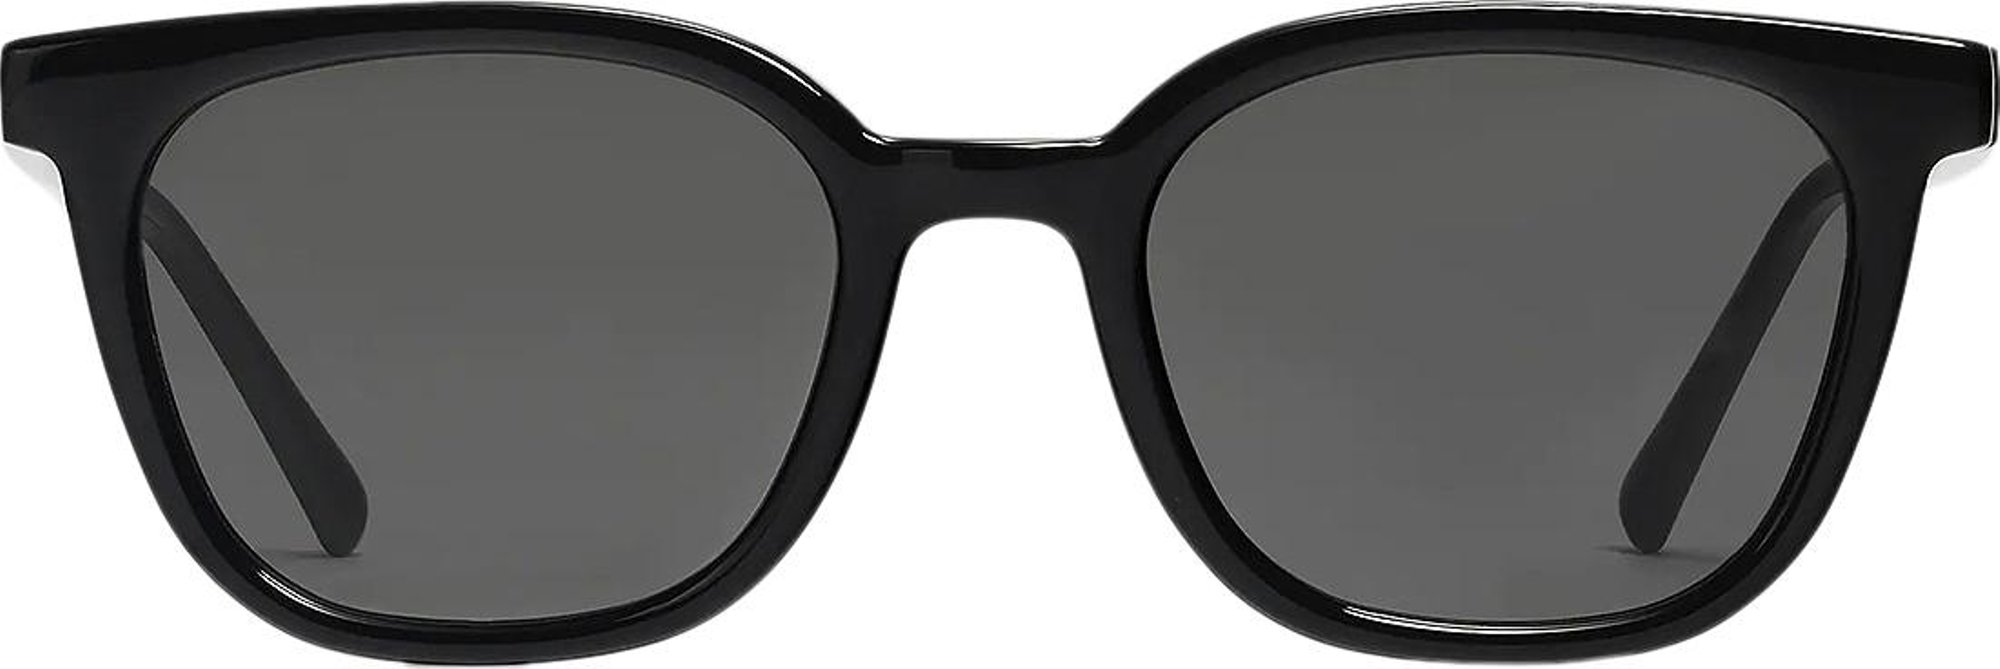 Buy Gentle Monster Tomy 01 Sunglasses 'Black' - TOMY 01 BLAC | GOAT